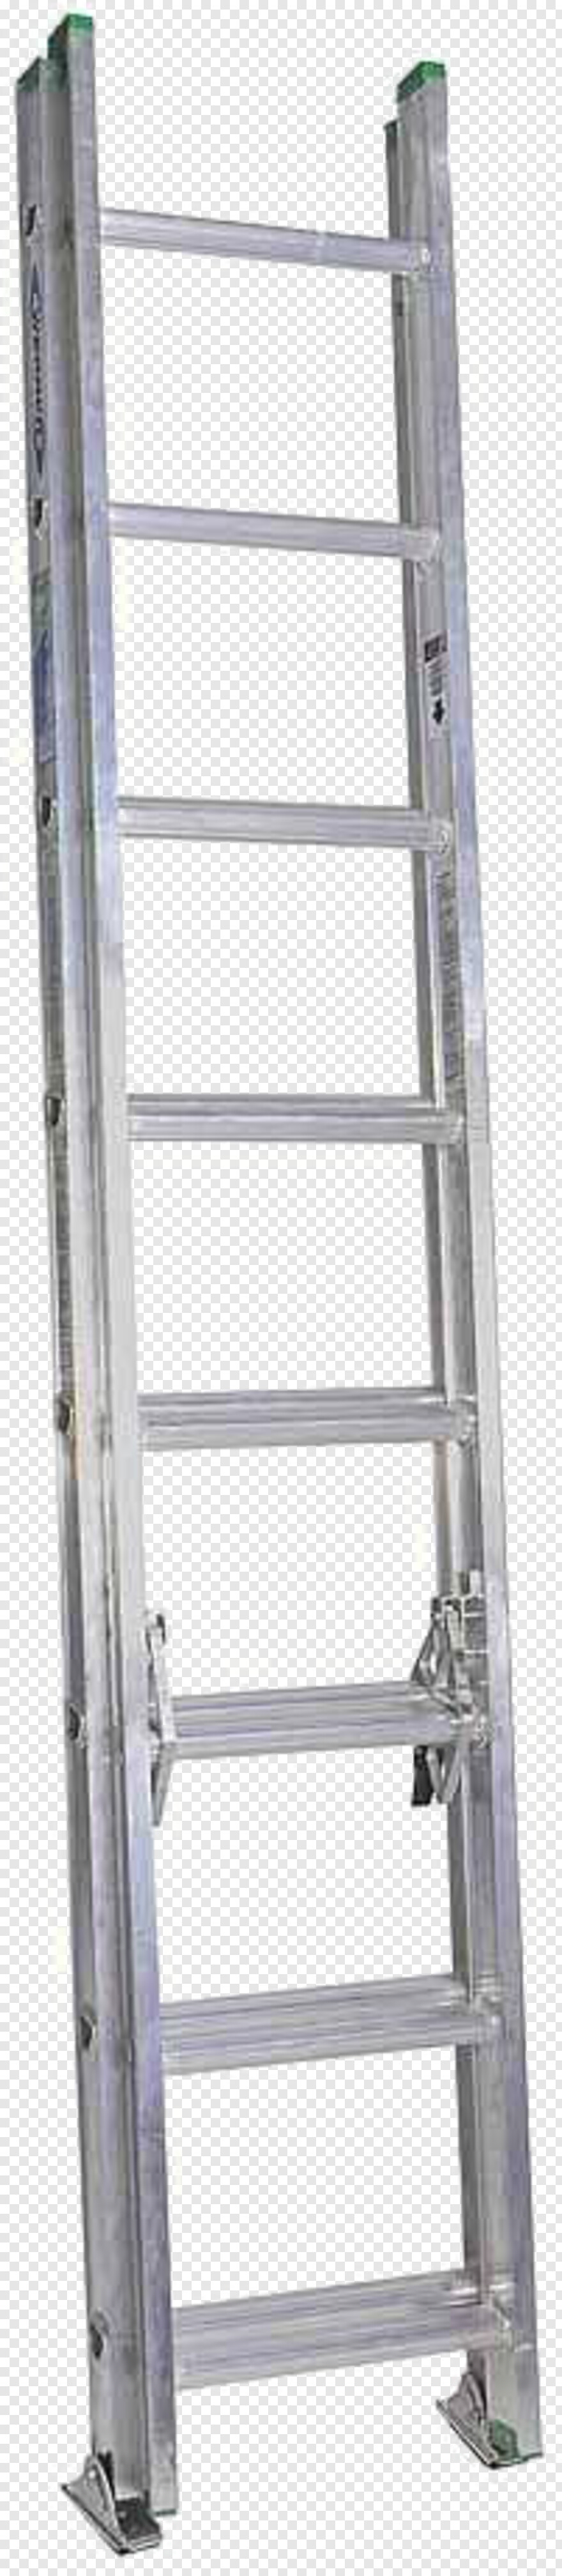 ladder # 428495